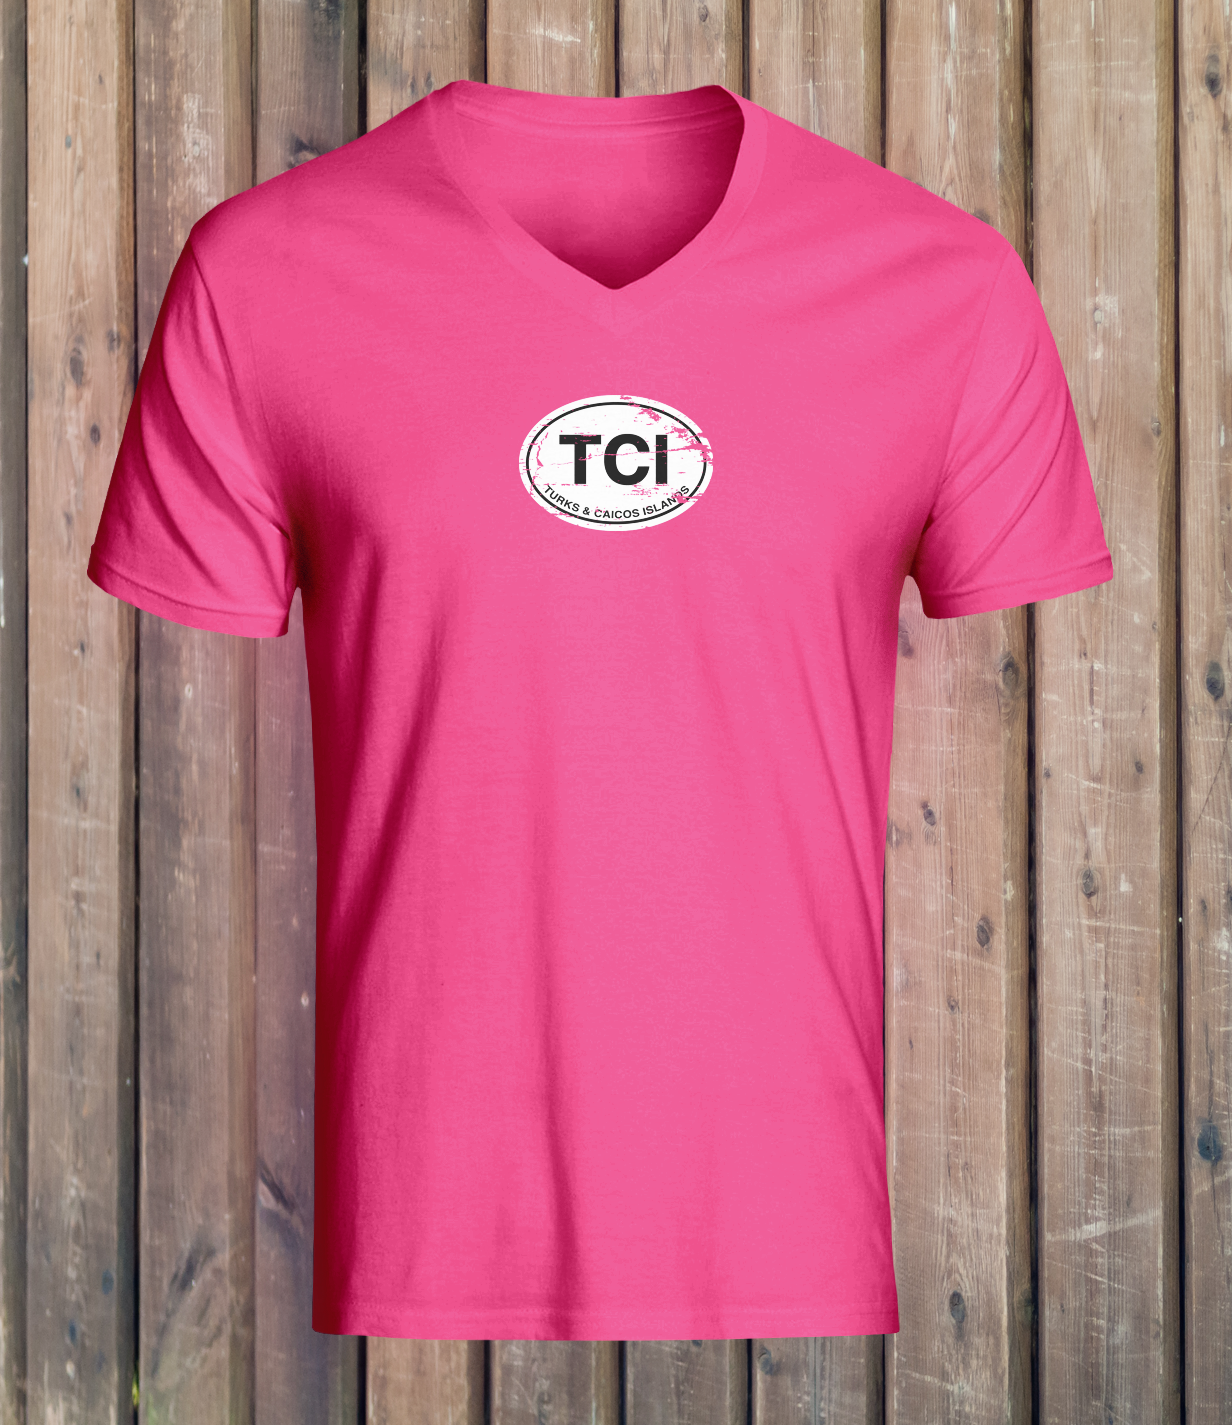 Turks & Caicos Women's Classic V-Neck T-Shirts - My Destination Location